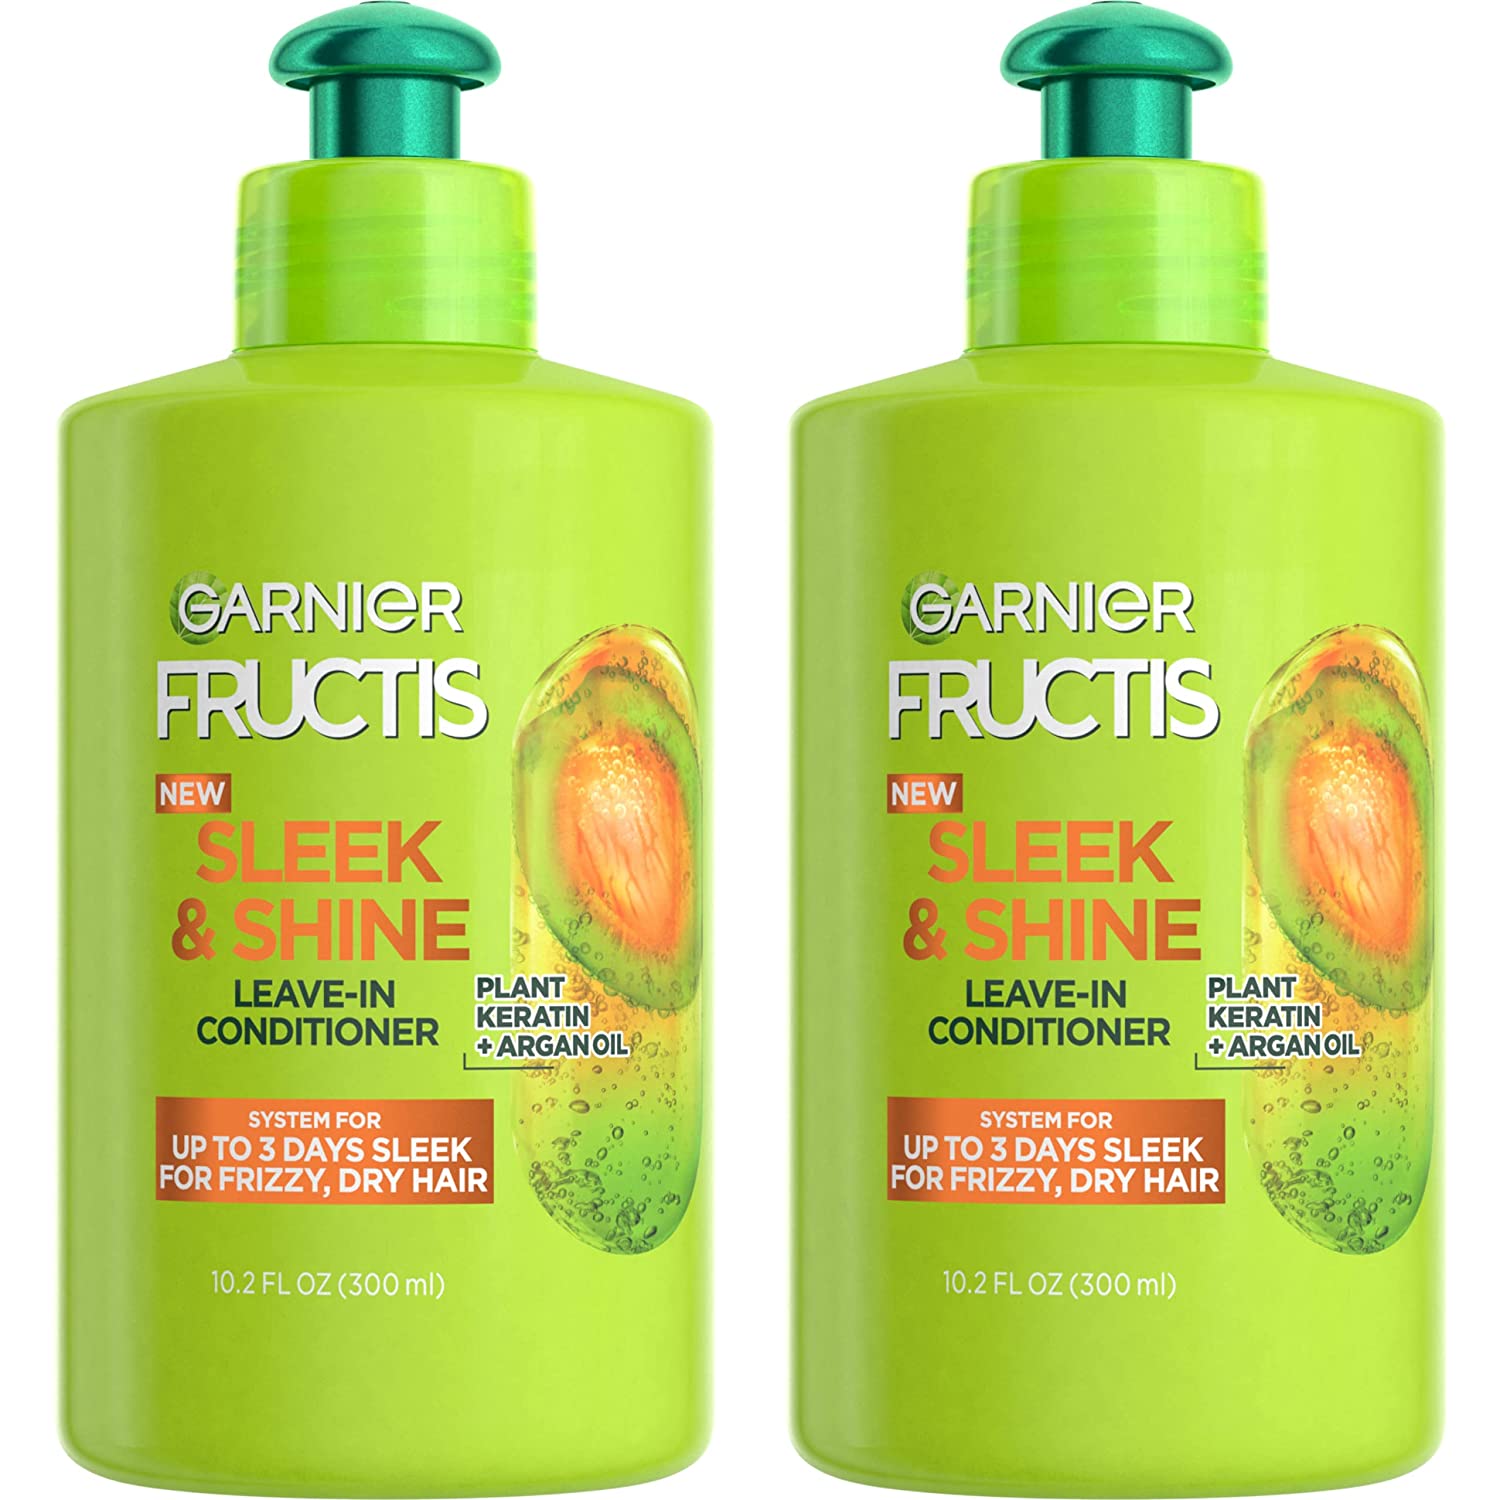 Garnier Fructis Sleek & Shine Leave-In Conditioning [...]